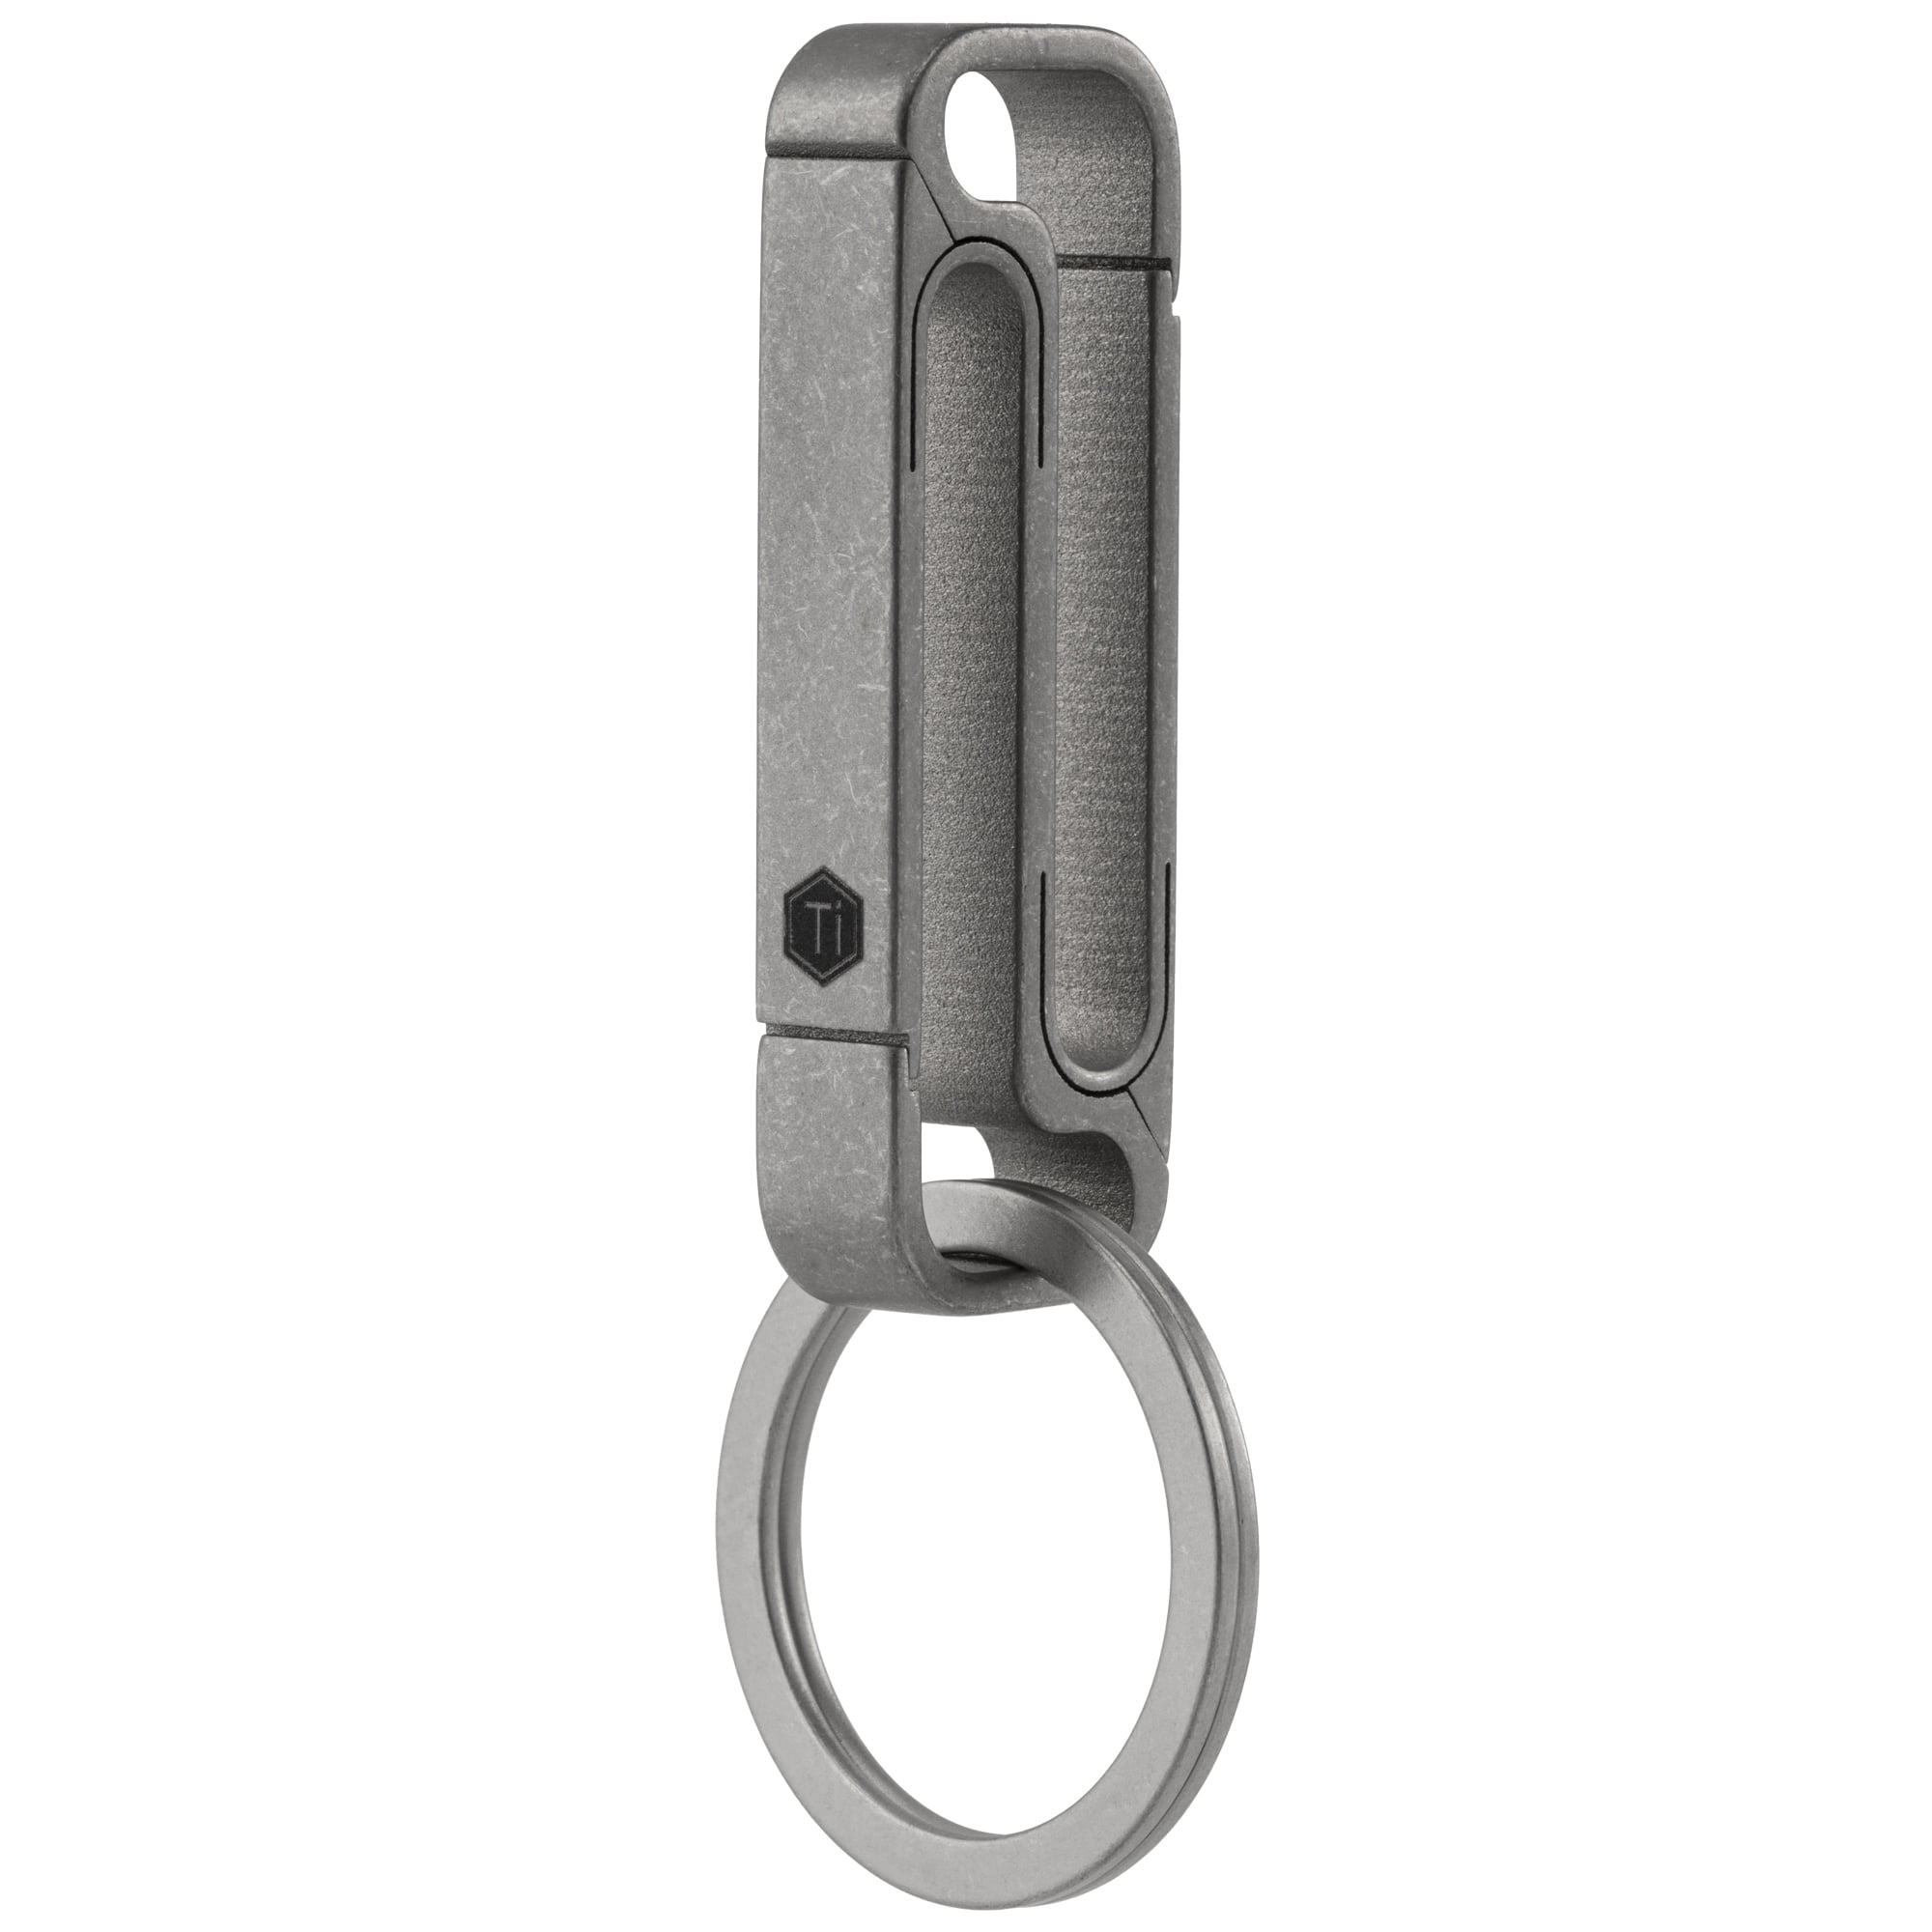 KeyUnity Double Side Carabiner Keychain Clip, KM10 EDC Titanium Belt Key  Holder Clips for Car Keys or Small Tools, Black 